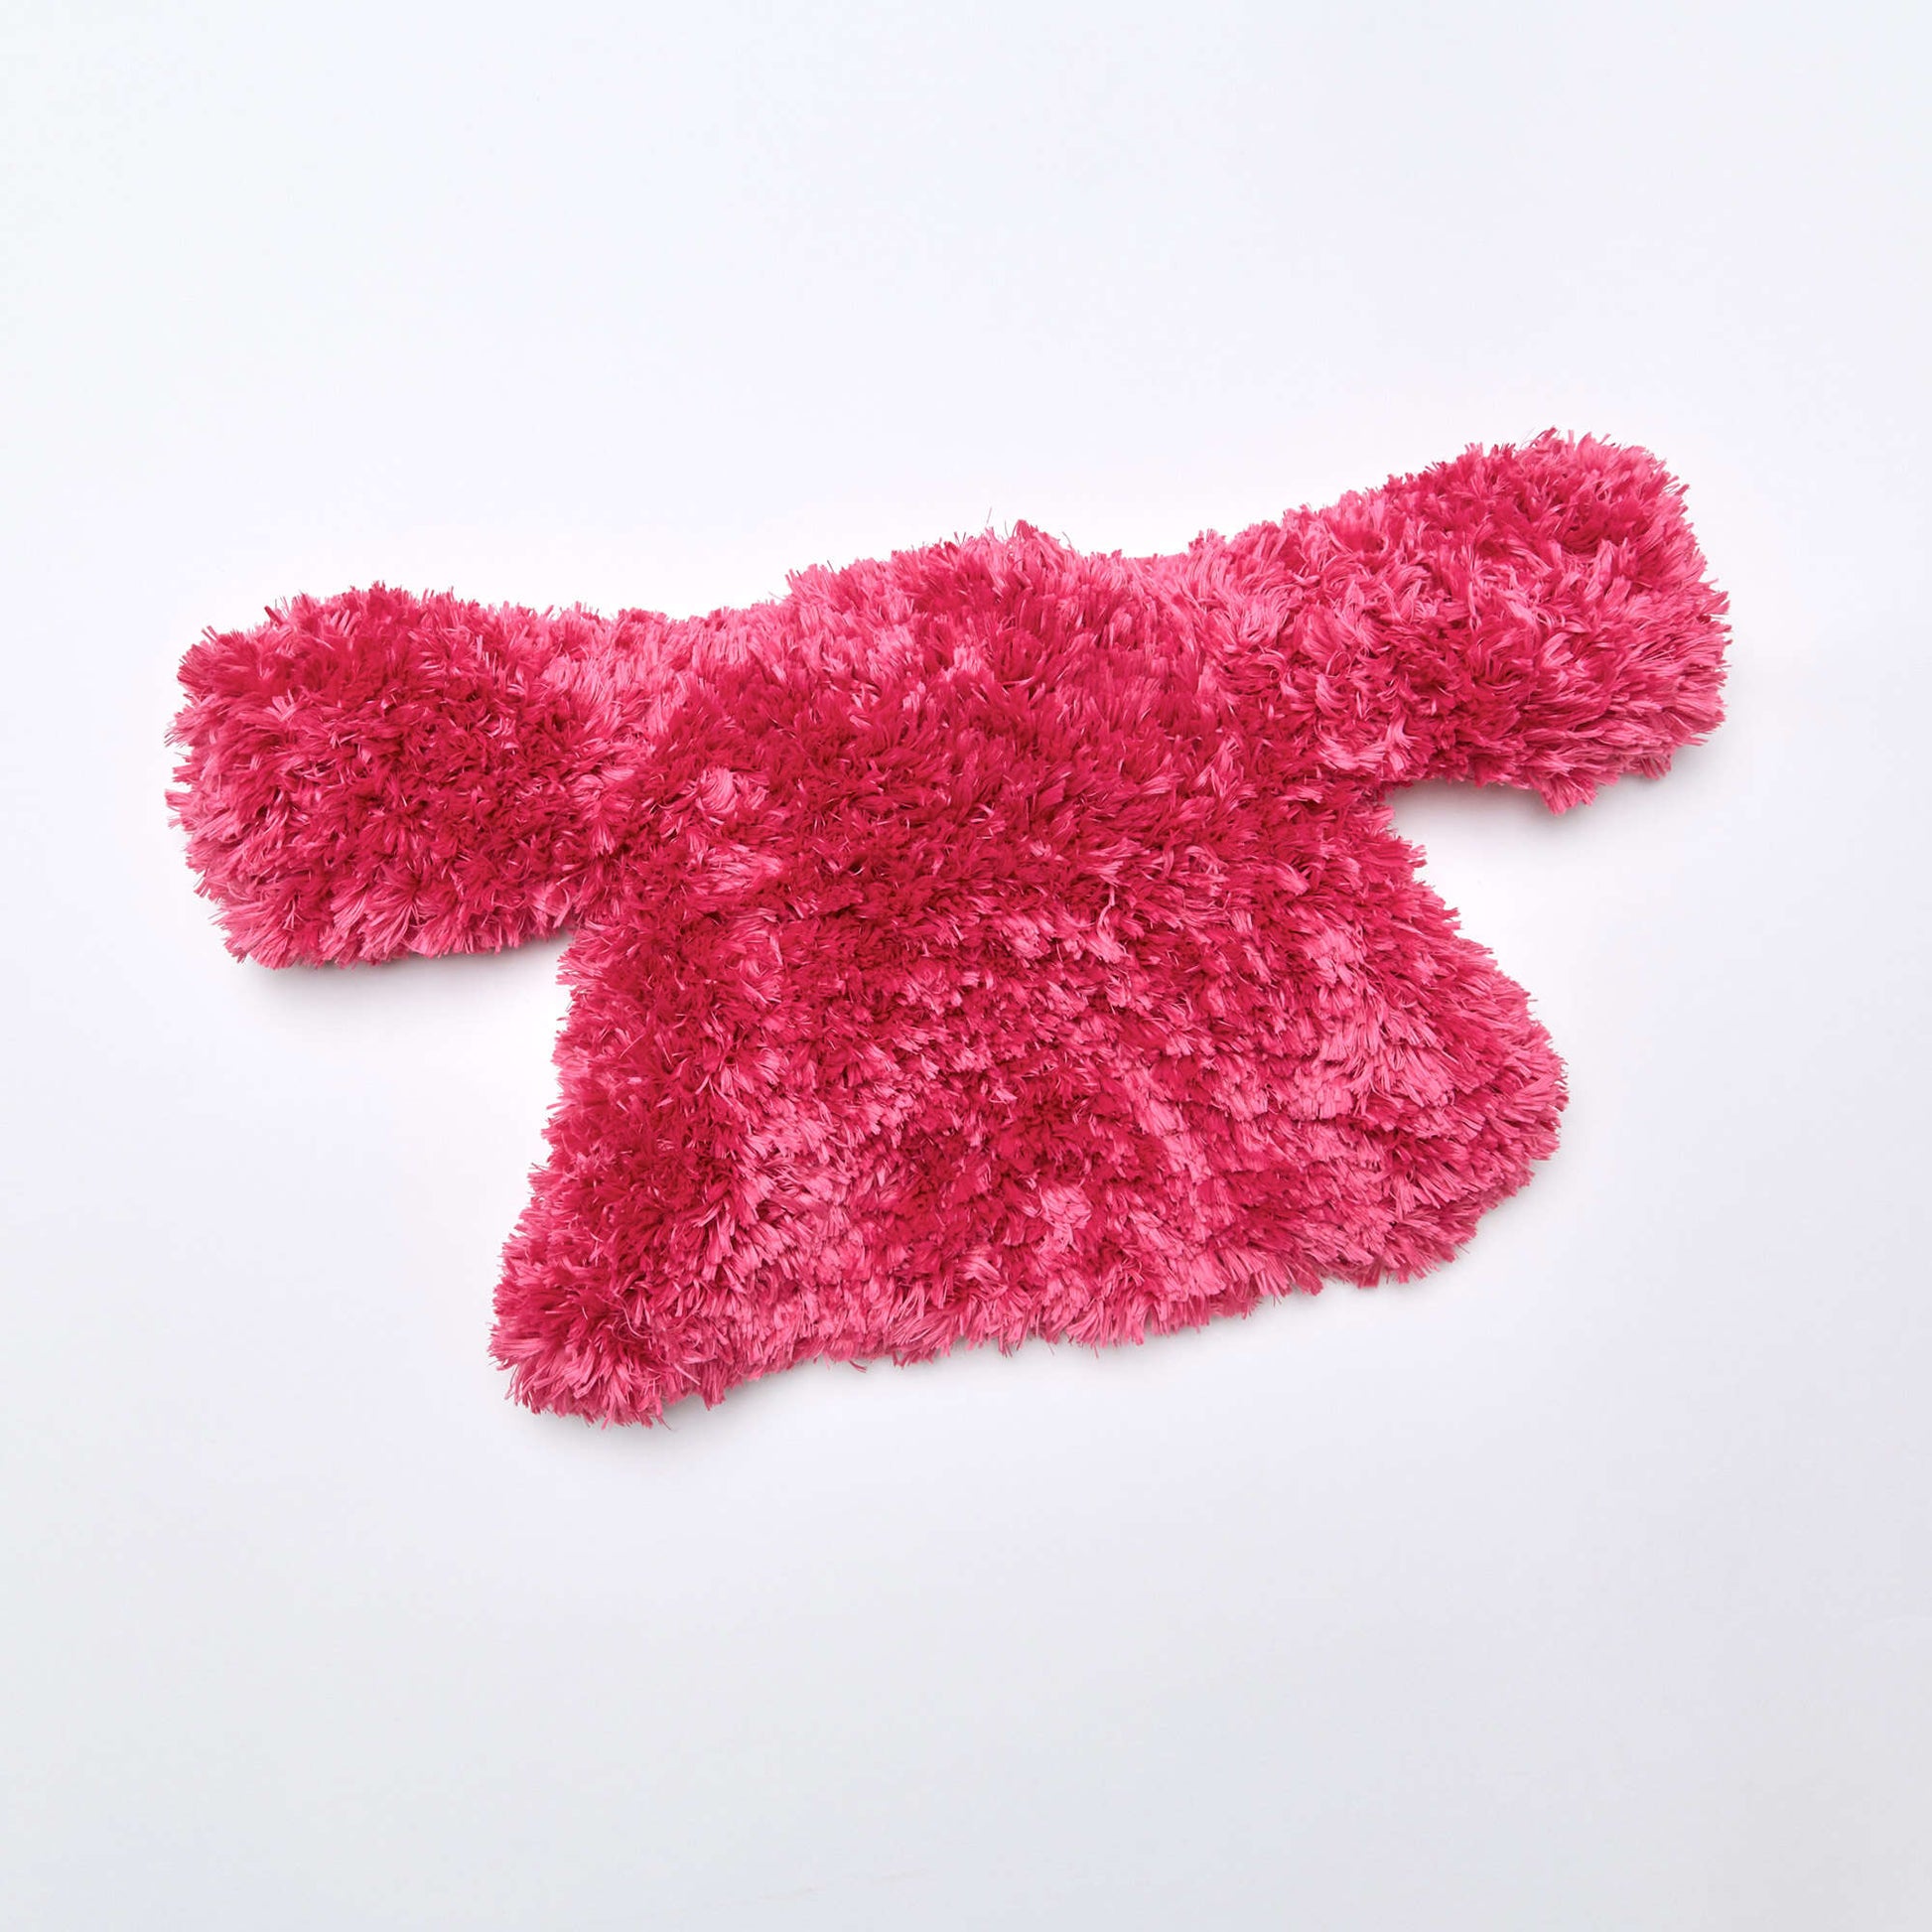 Free Red Heart Girls' Fashion Fur Shrug Knit Pattern